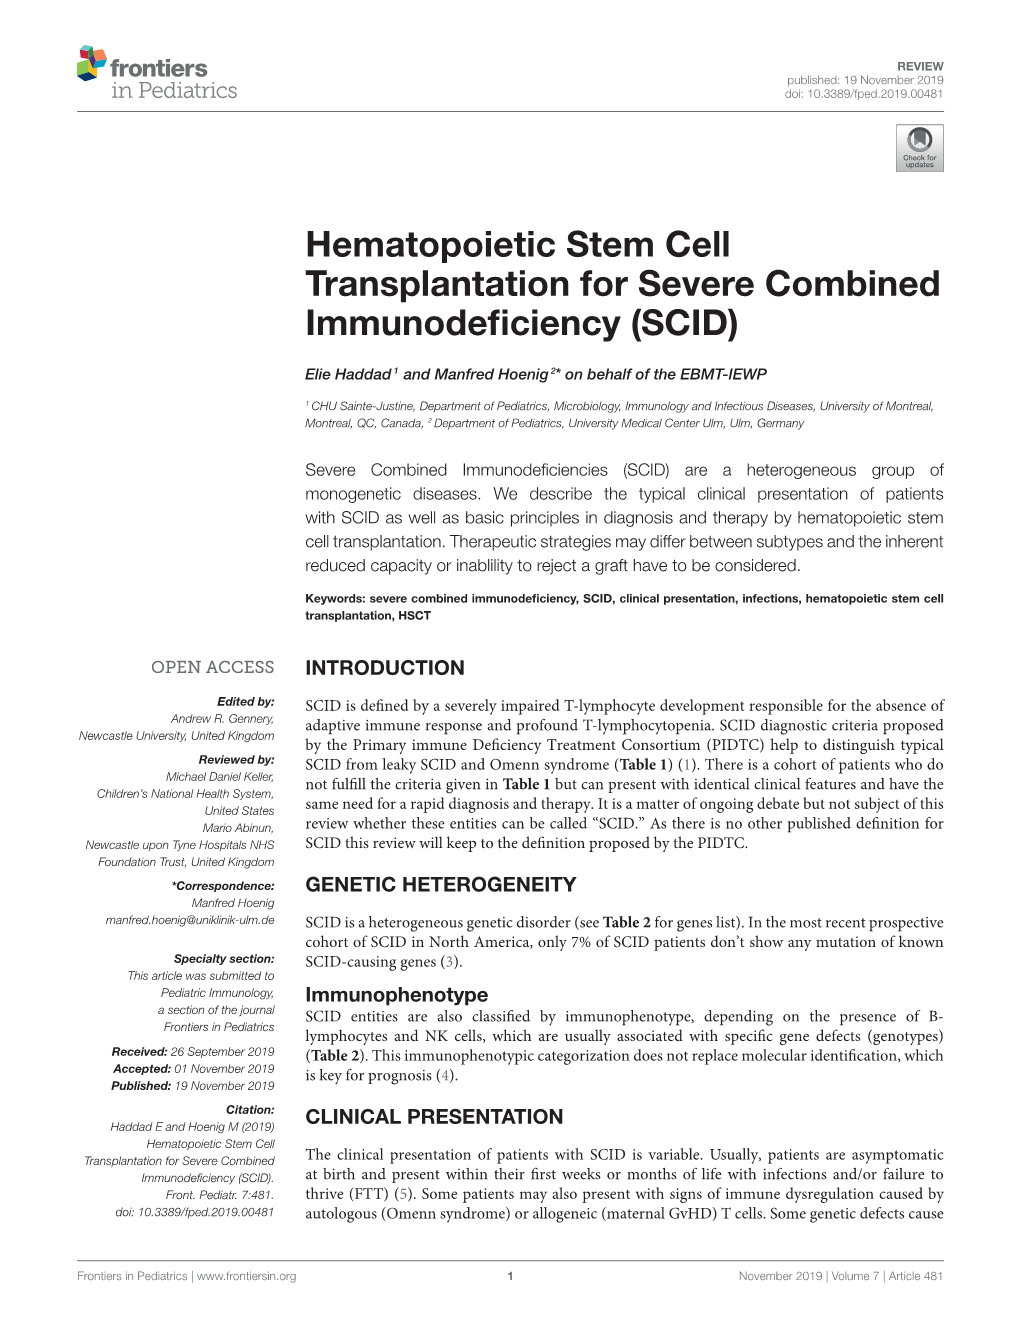 Hematopoietic Stem Cell Transplantation for Severe Combined Immunodeﬁciency (SCID)